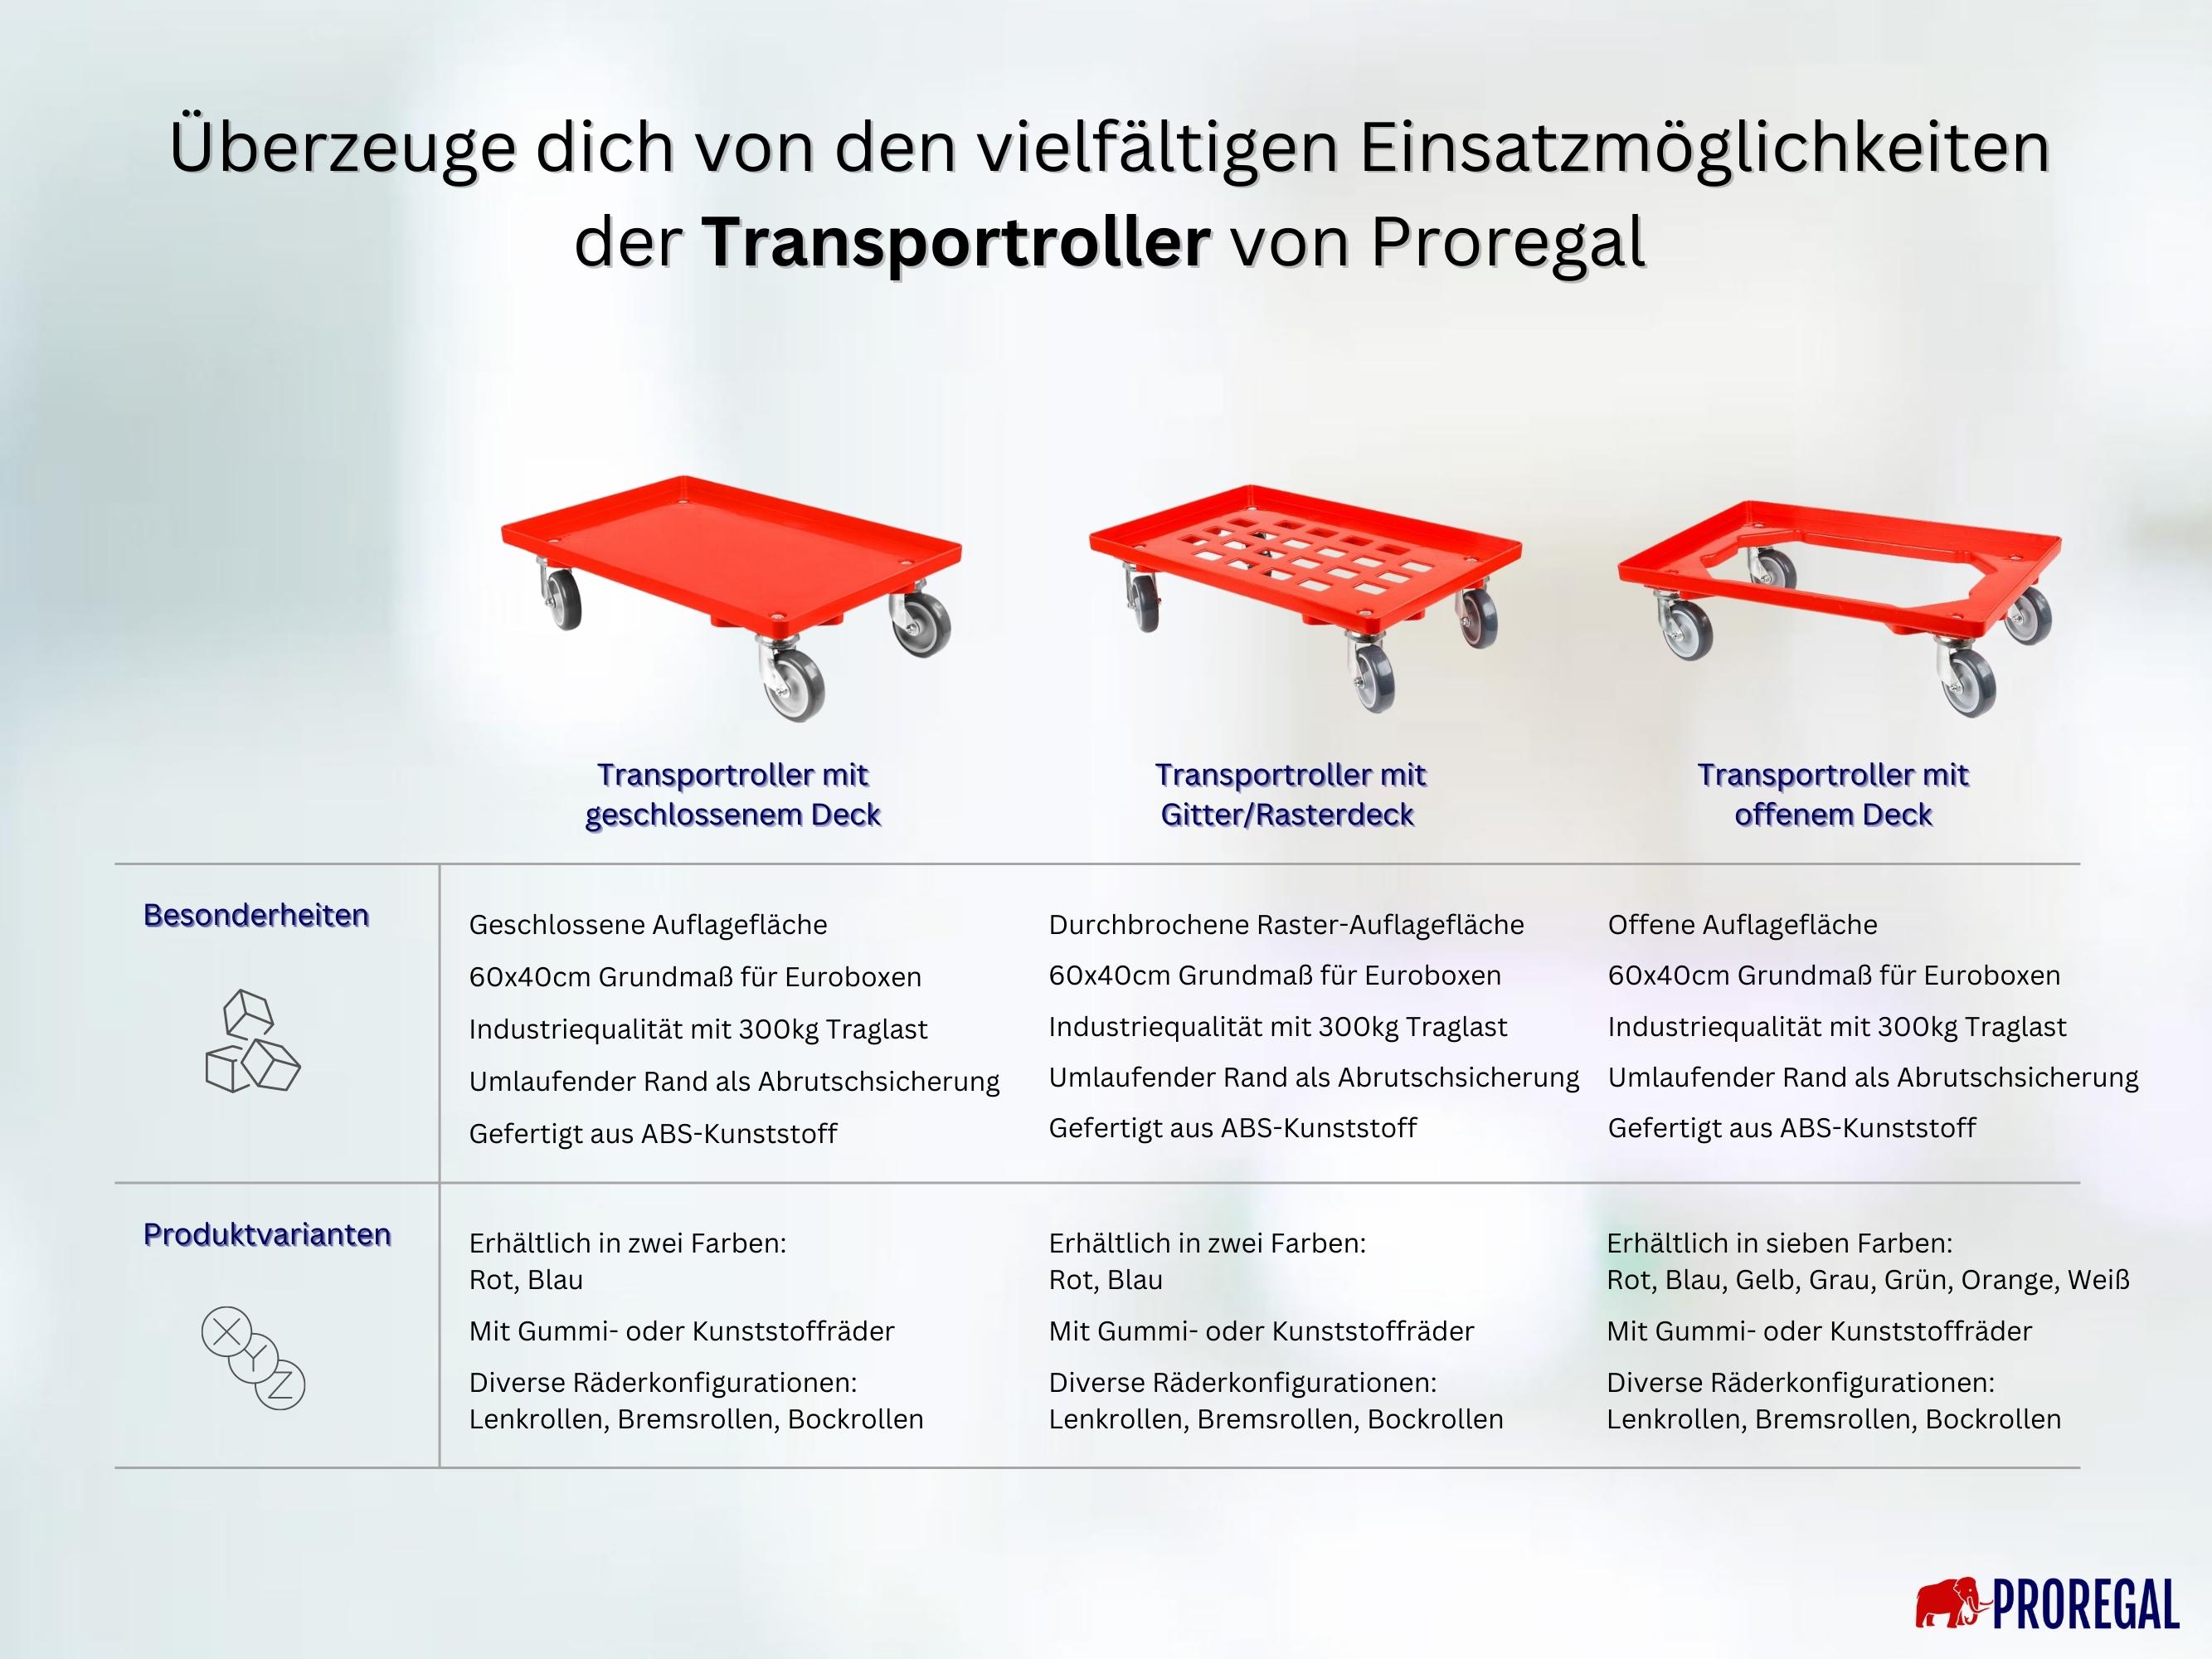 SparSet 2x Transportroller für Euroboxen 60x40cm mit Kunststoffräder rot | Offenes Deck | 2 Lenkrollen & 2 Bremsrollen | Traglast 300kg | Kistenroller Logistikroller Rollwagen Profi-Fahrgestell